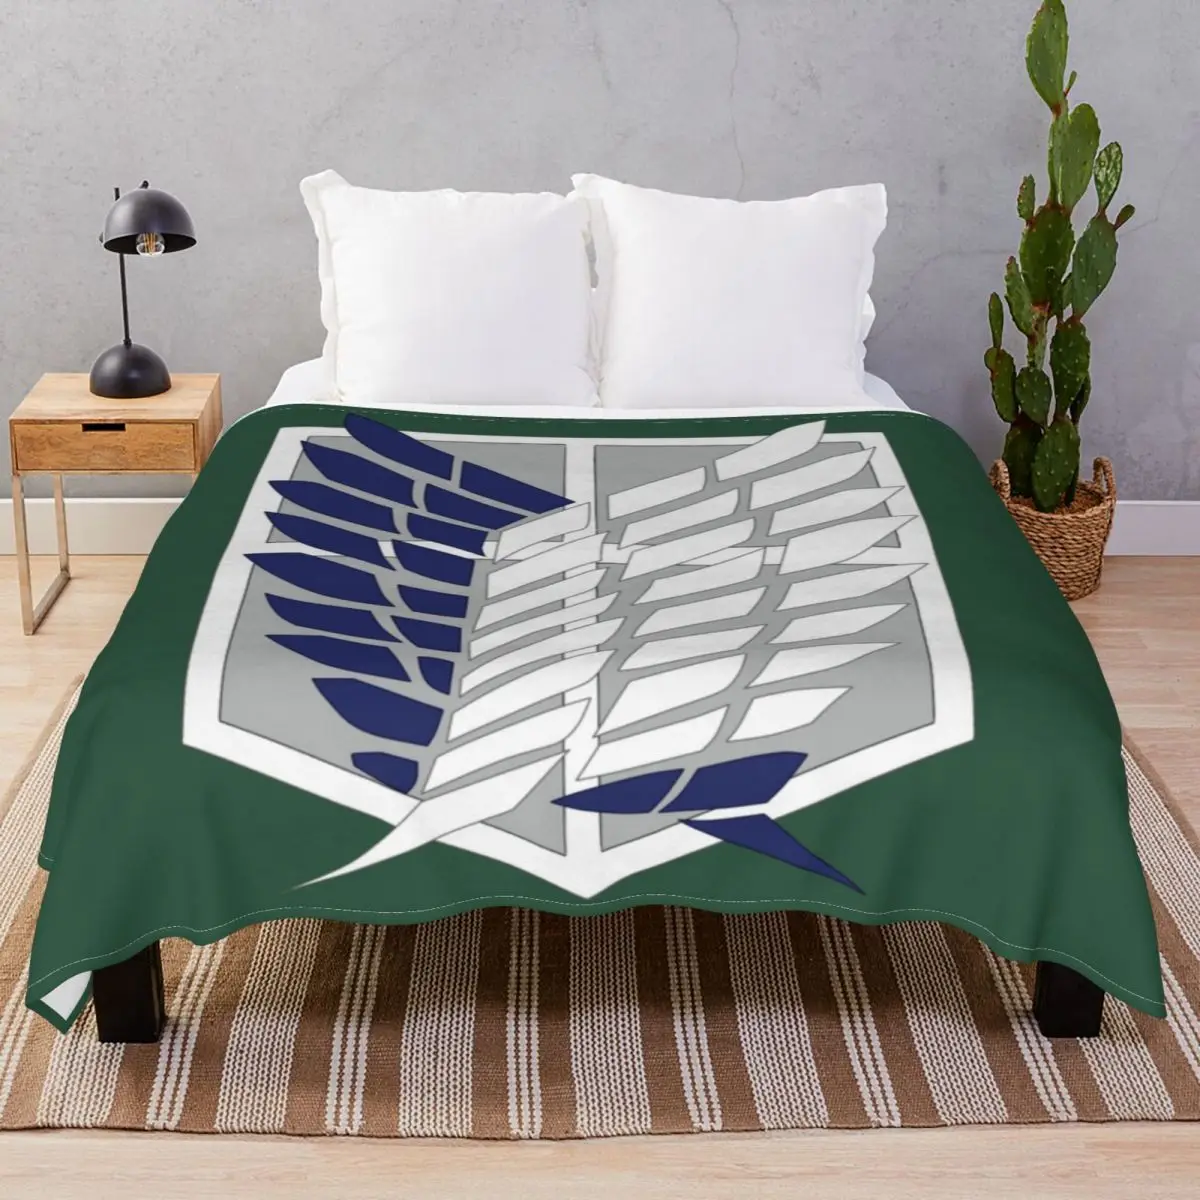 Wings Of Freedom Logo Blankets Velvet Textile Decor Multi-function Throw Blanket for Bedding Home Couch Travel Cinema